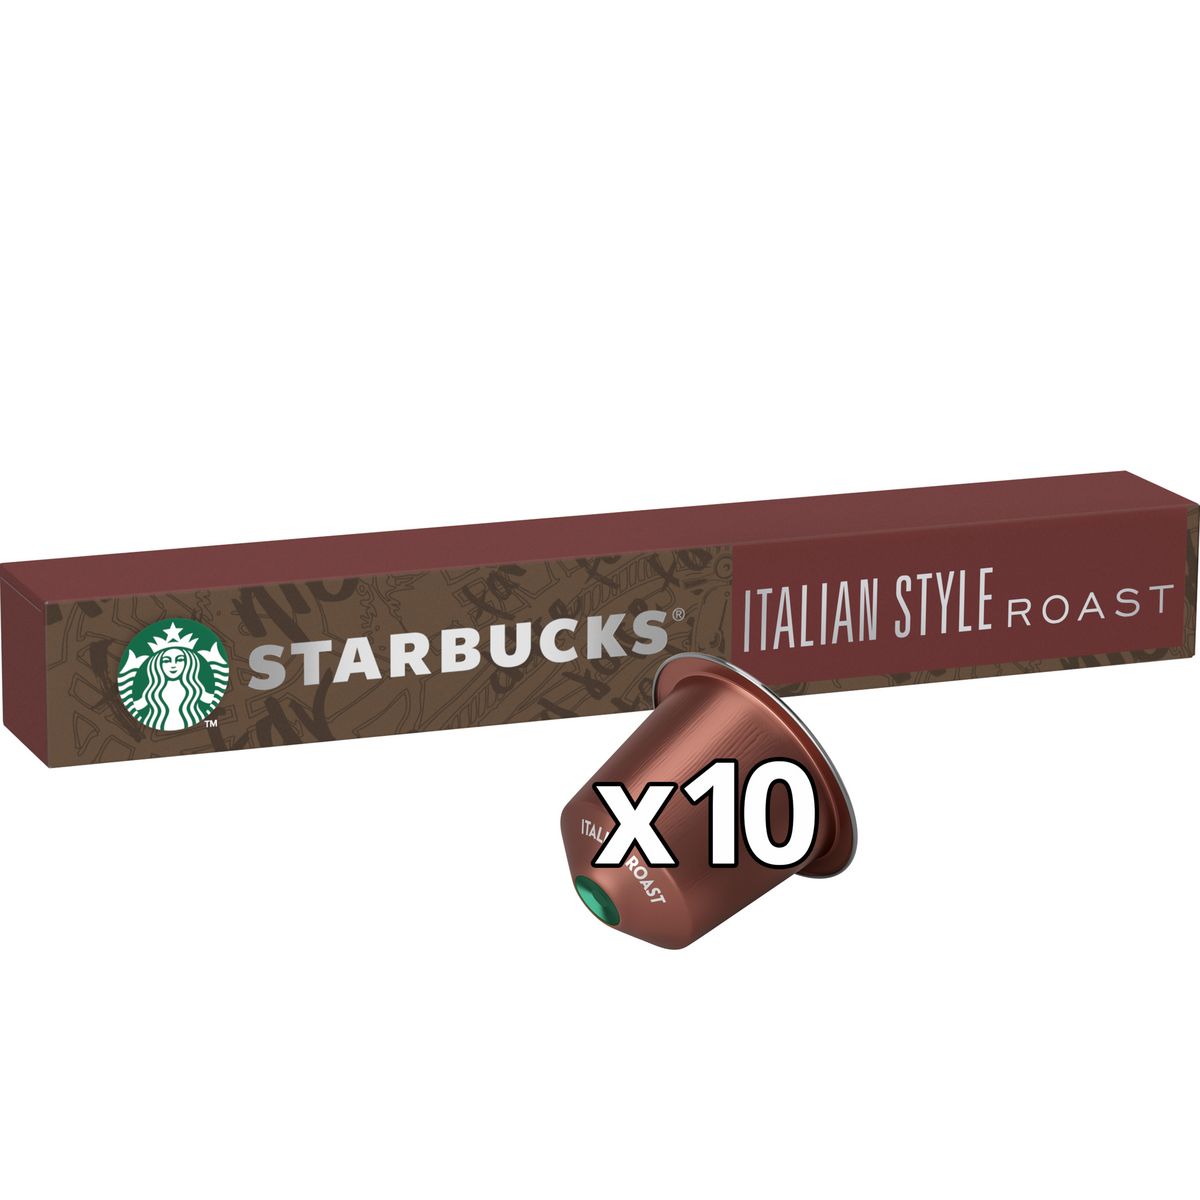 STARBUCKS Capsules de café Italian Style roast intensité 11 compatibles Nespresso 10 capsules 56g